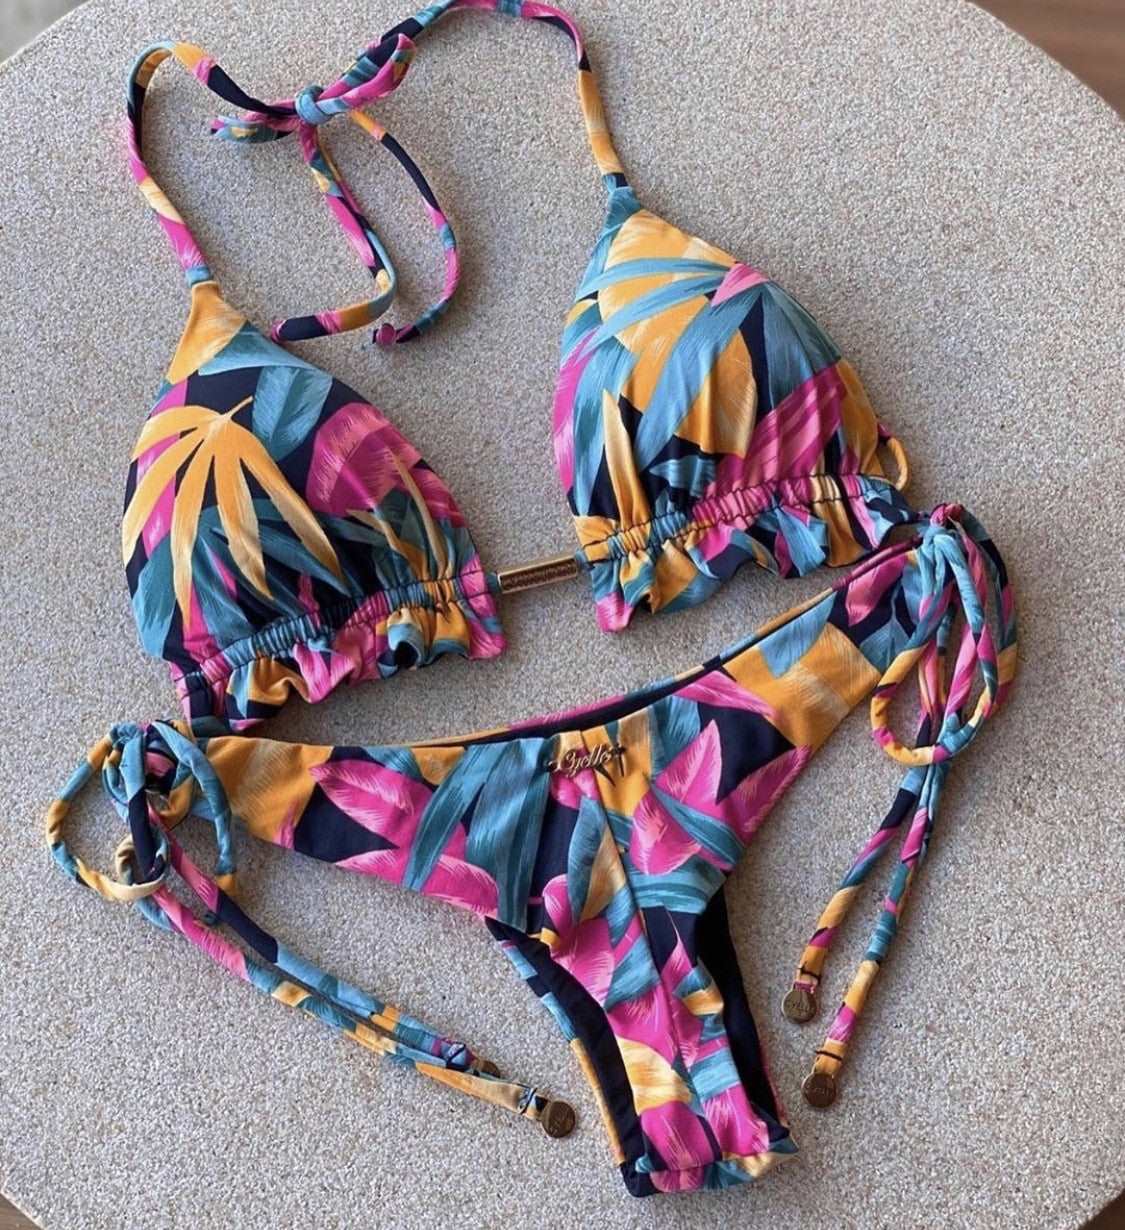 2023 Girls Ties Halter Brazilian Push Up Bikini Tassels Biquini Swimwear Strappy Bandage Swimsuit Beach Wear Bathing Suit Women S~XL MK19